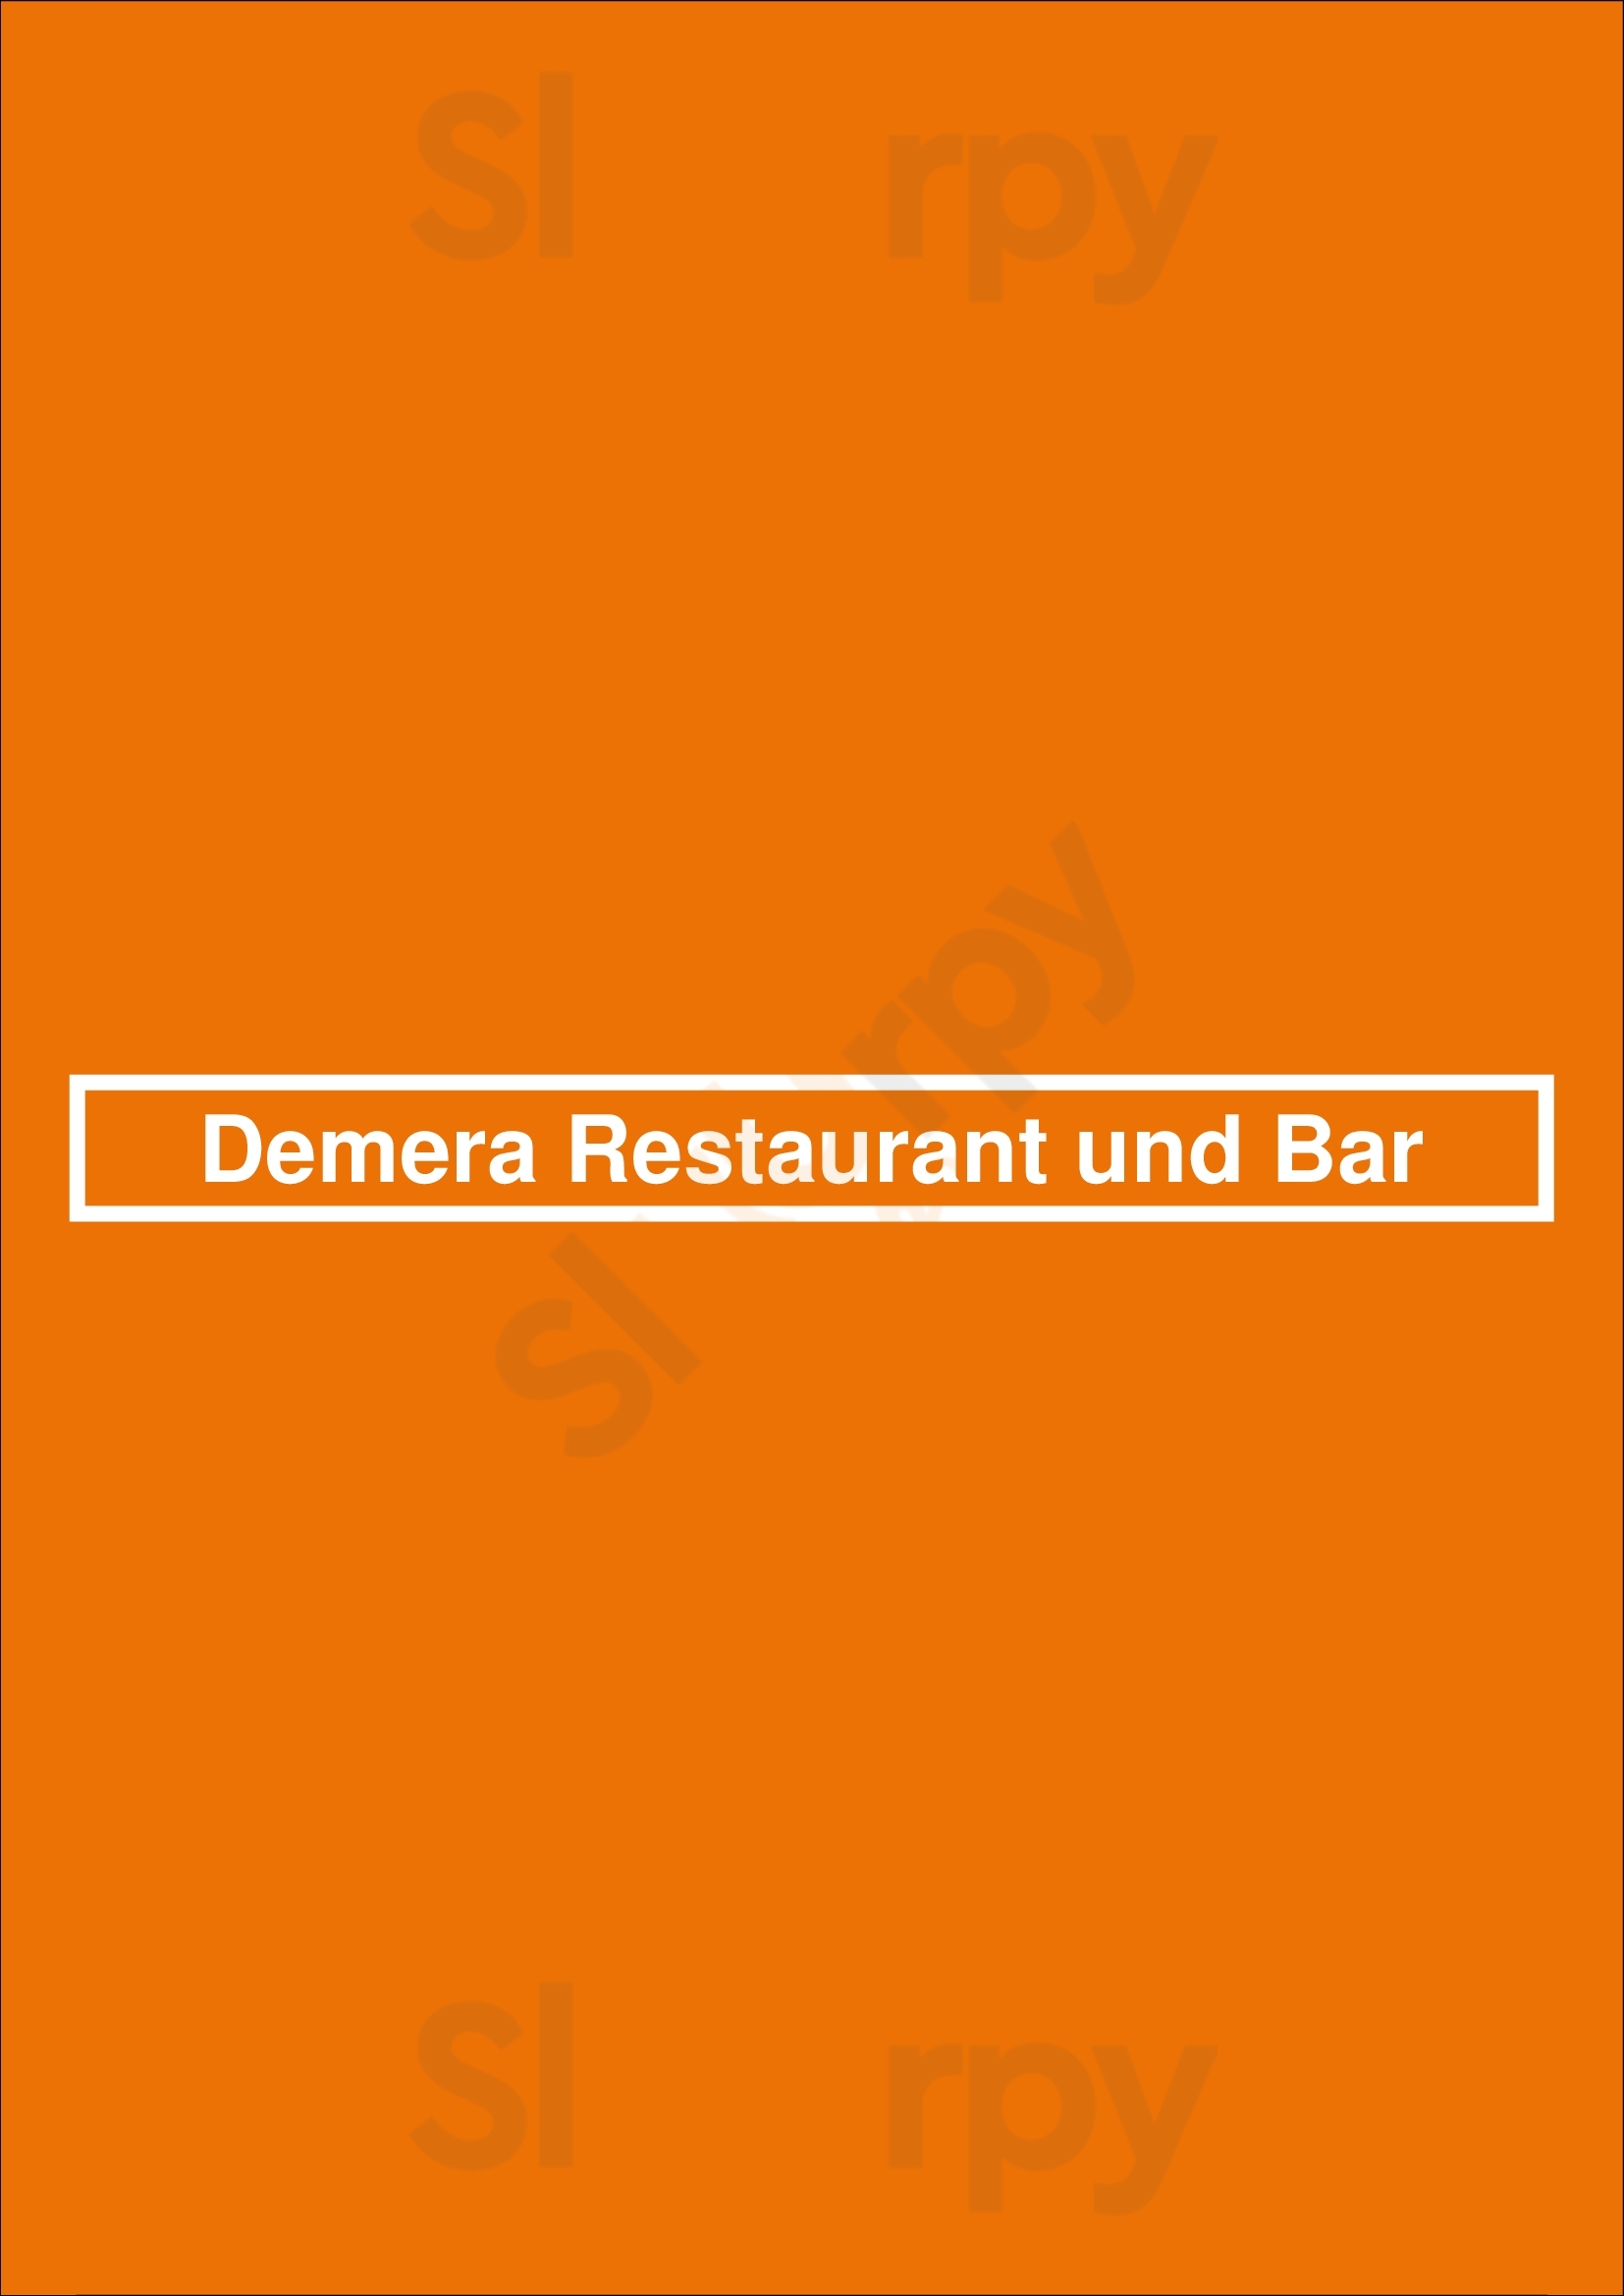 Demera Restaurant Und Bar Frankfurt am Main Menu - 1